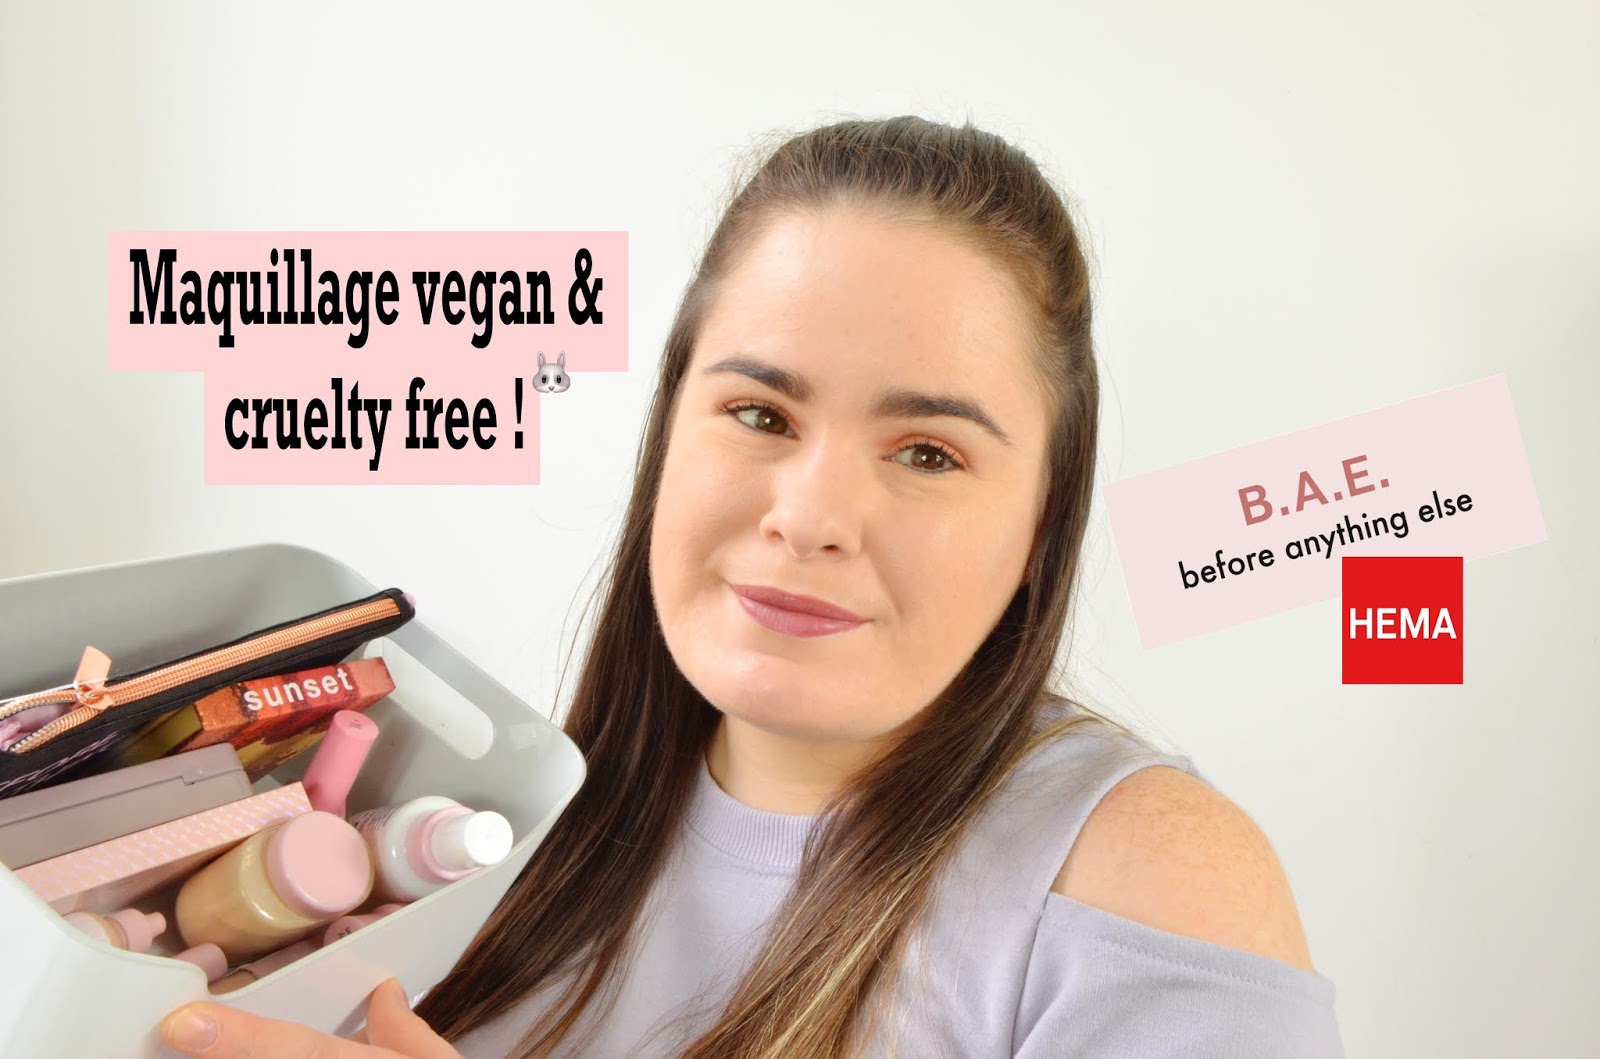 crash test maquillage cruelty free et vegan collection BAE by hema